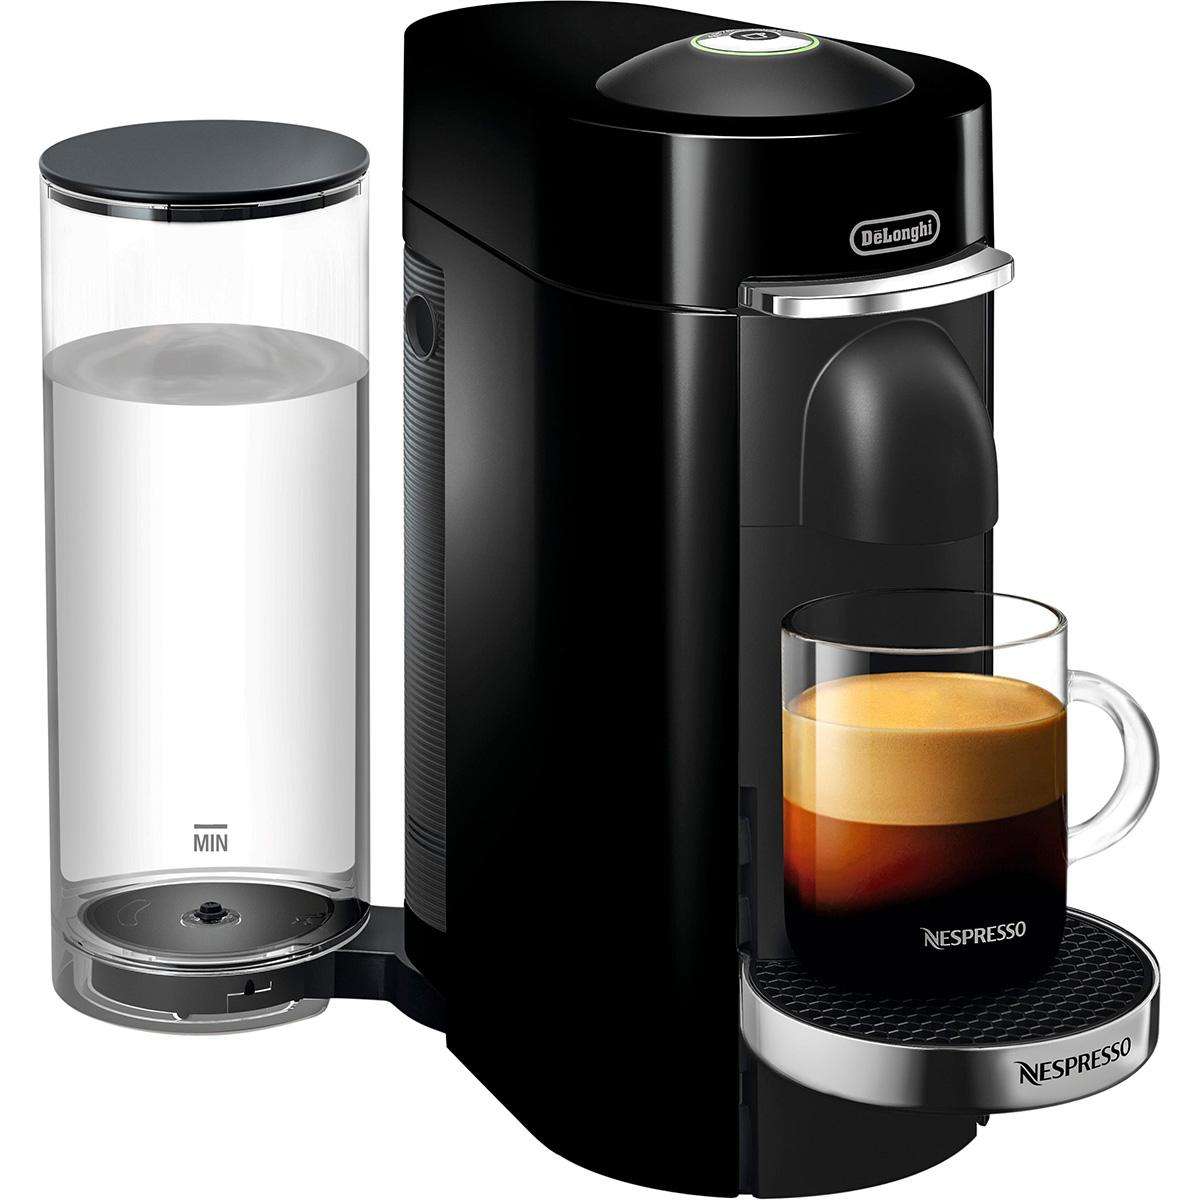 Nespresso VertuoPlus Deluxe Coffee Maker for $99.99 Shipped